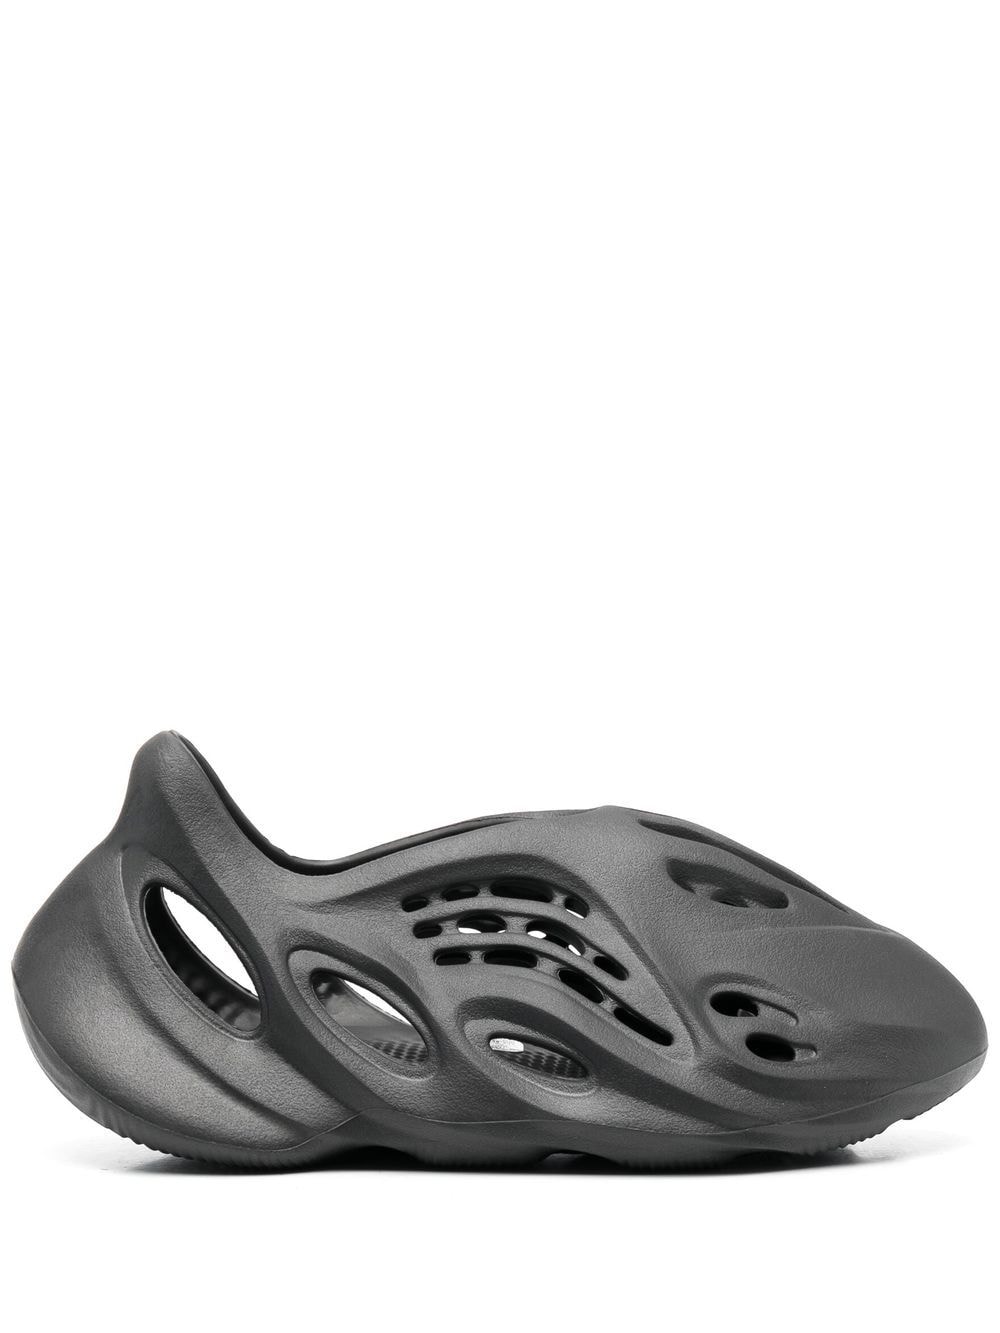 adidas Yeezy Foam Runner 'Onyx' sneakers - Black von adidas Yeezy